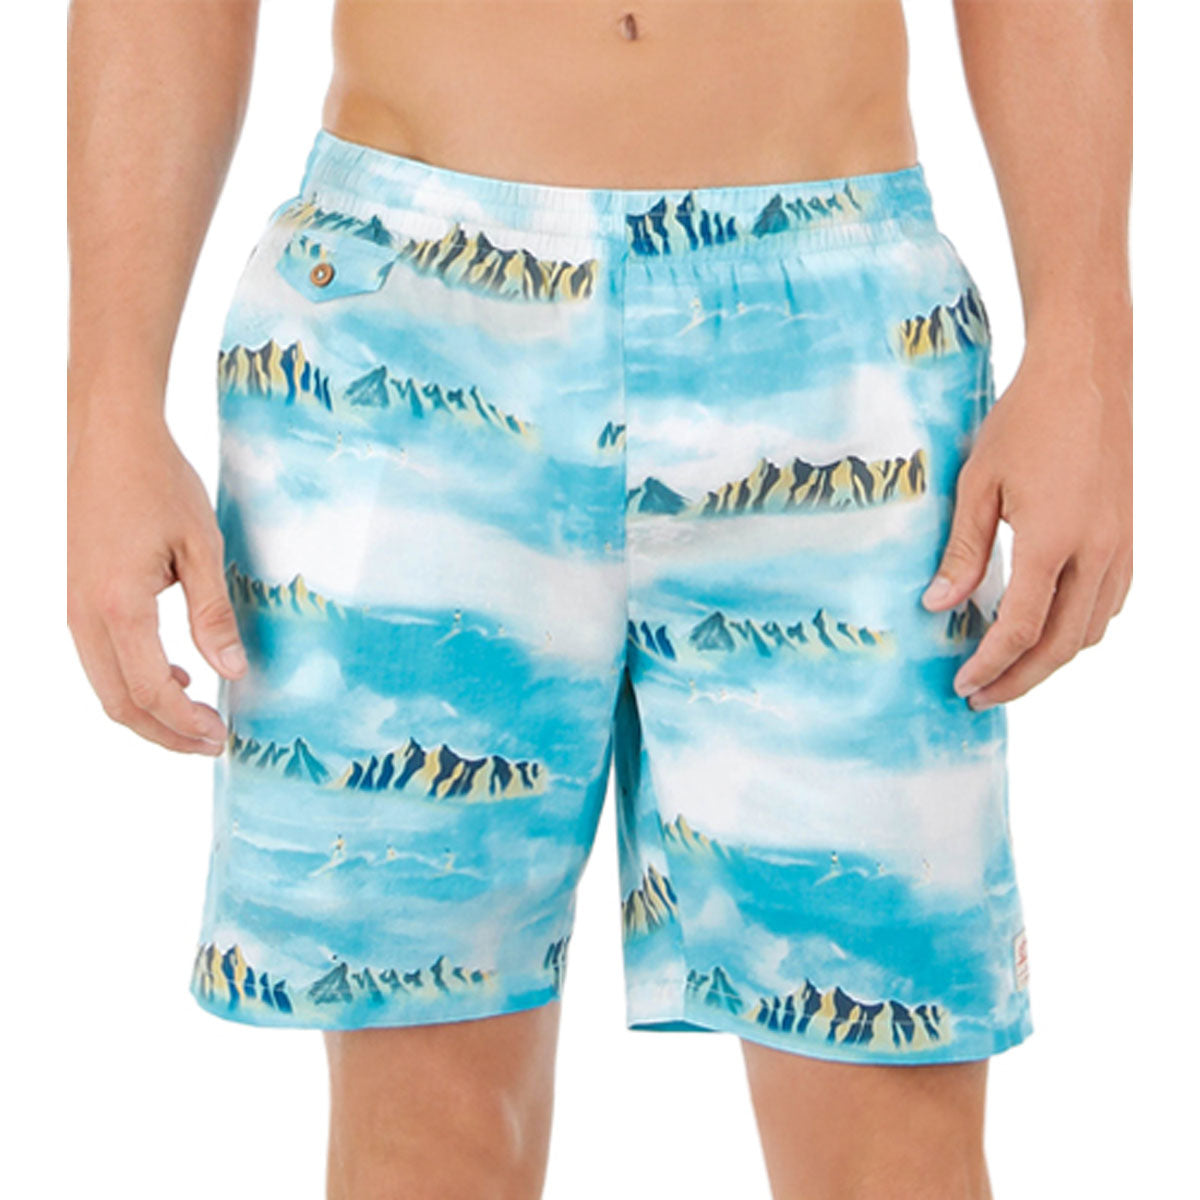 Lost Pool Party Men's Boardshort Shorts Brand New-LB133731